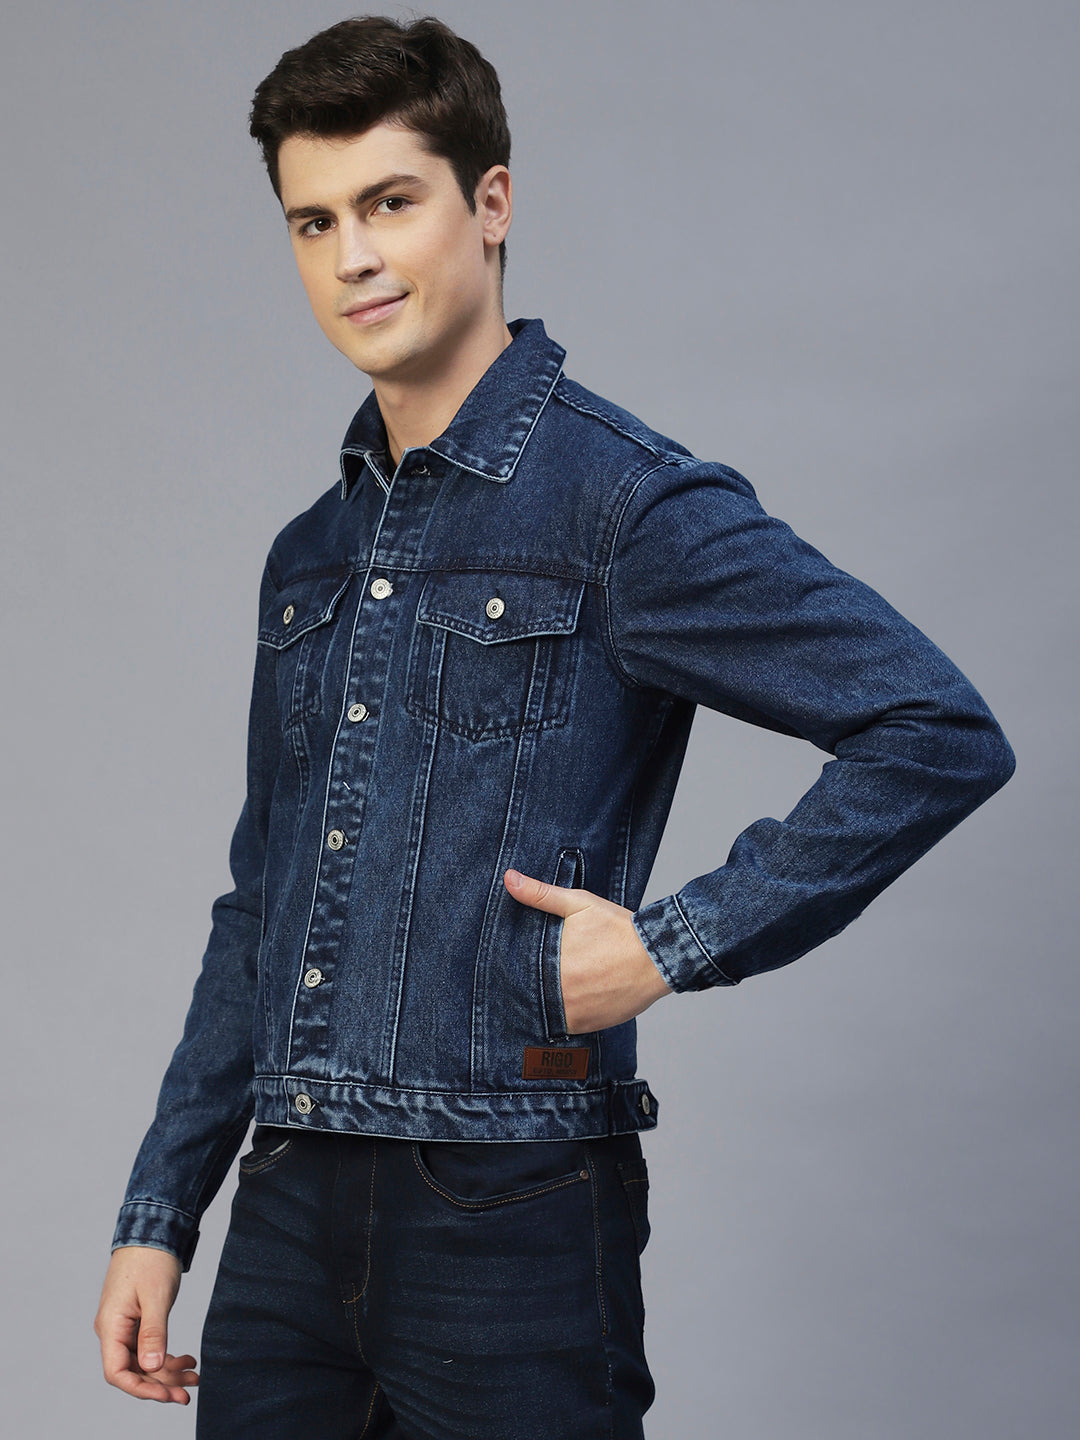 Wholesale Lot of 12 REVOLT JEANS Blue Denim Jacket sleeveless New With Tags  | eBay